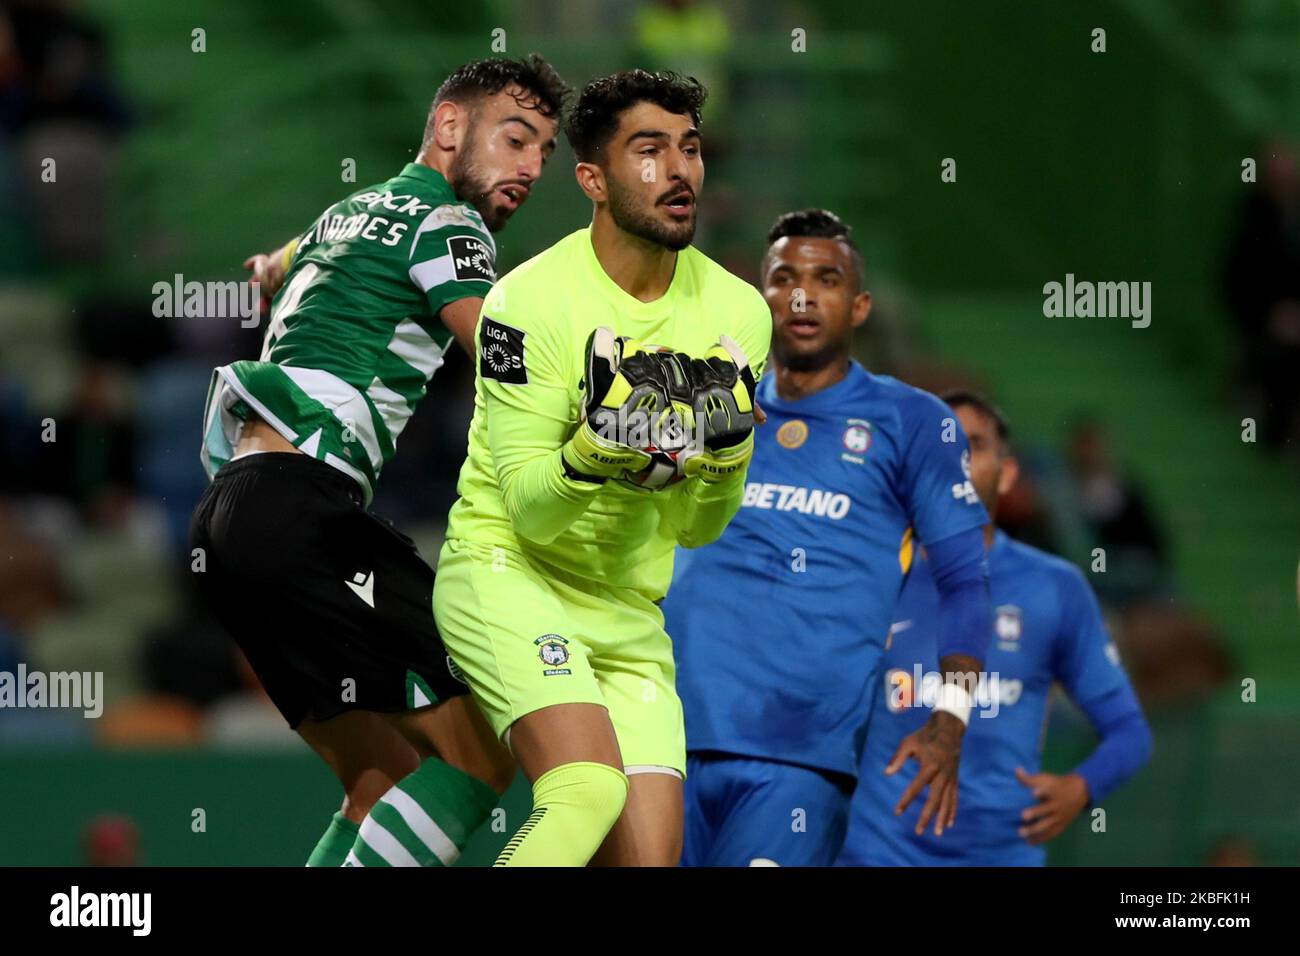 Futebol Clube Barreirense - Amir Abedz, guarda-redes do